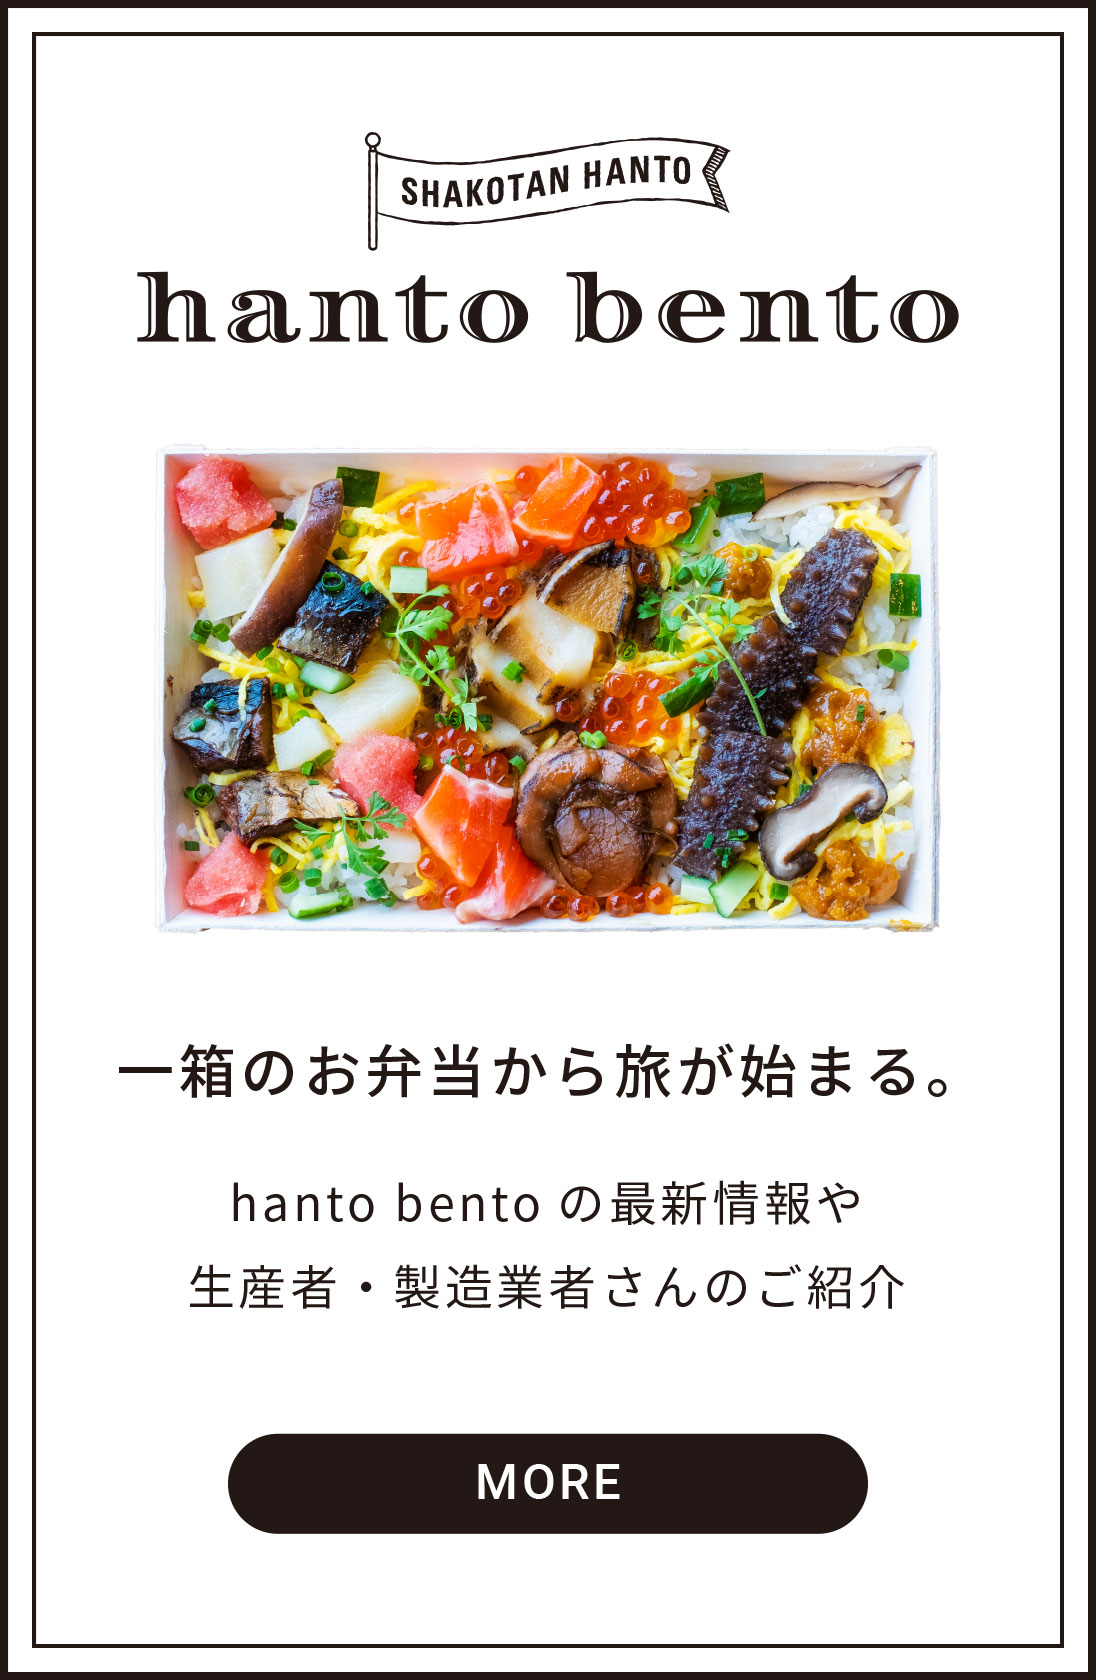 SHAKOTAN HANTO - hanto bento - 一箱のお弁当から旅が始まる。  hanto bento の最新情報や生産者・製造業者さんのご紹介